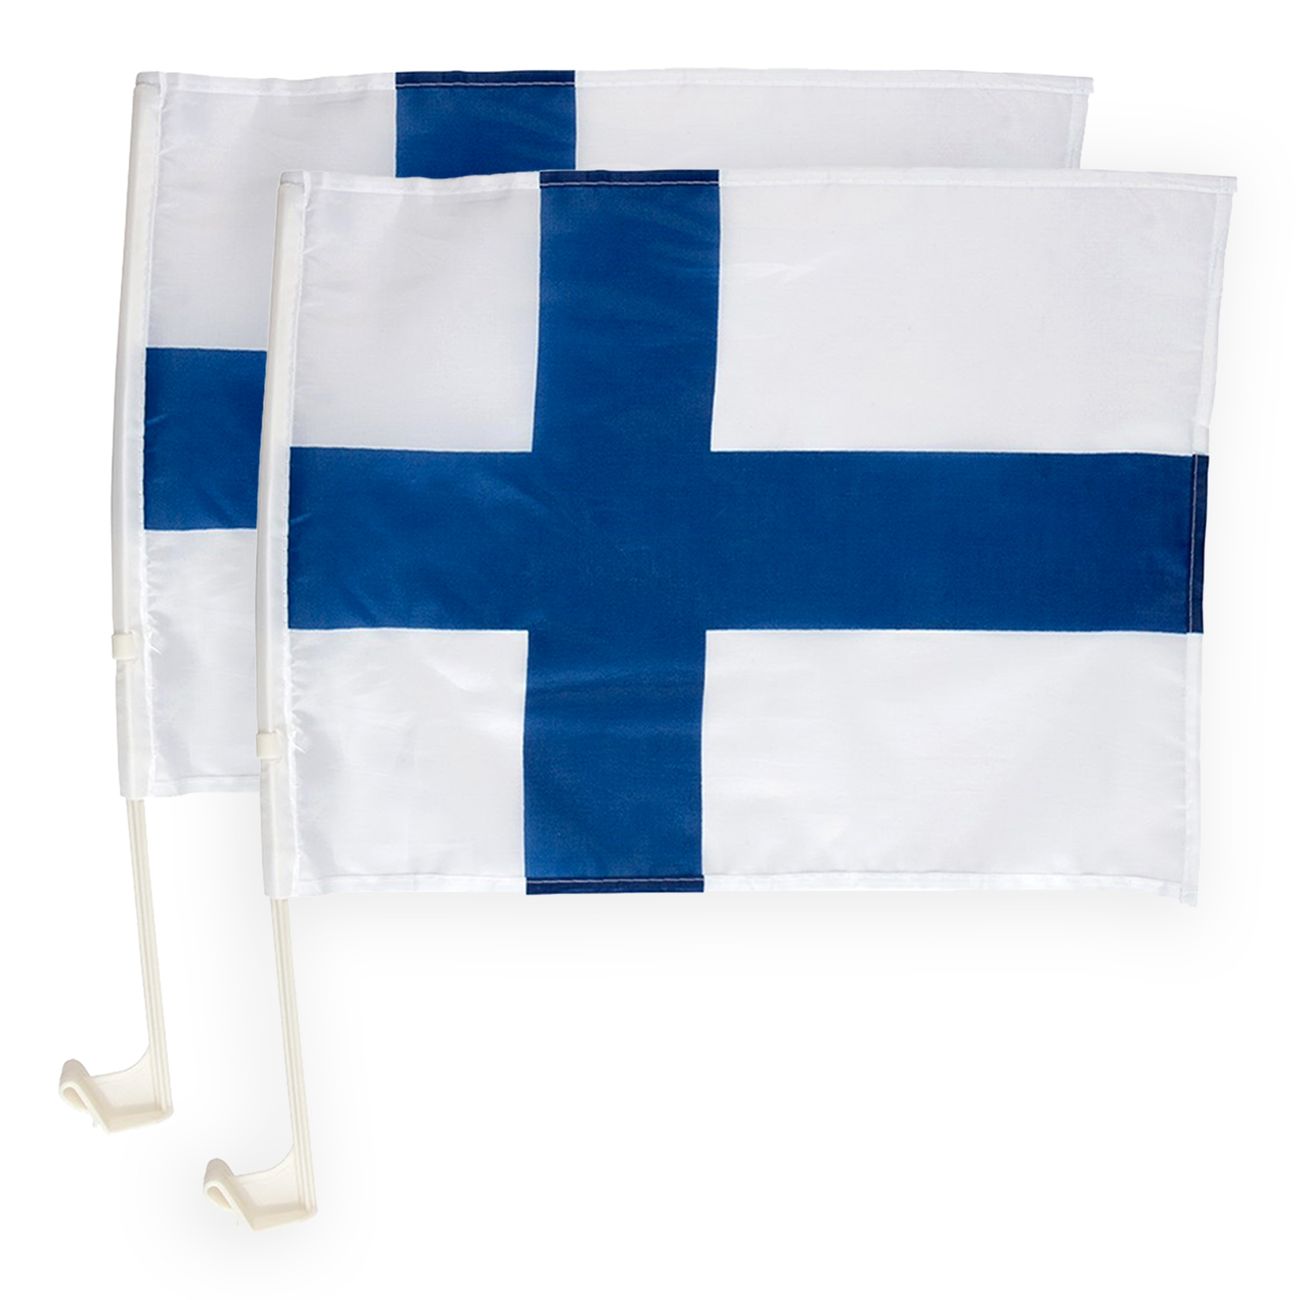 bilflagga-finland-93280-1